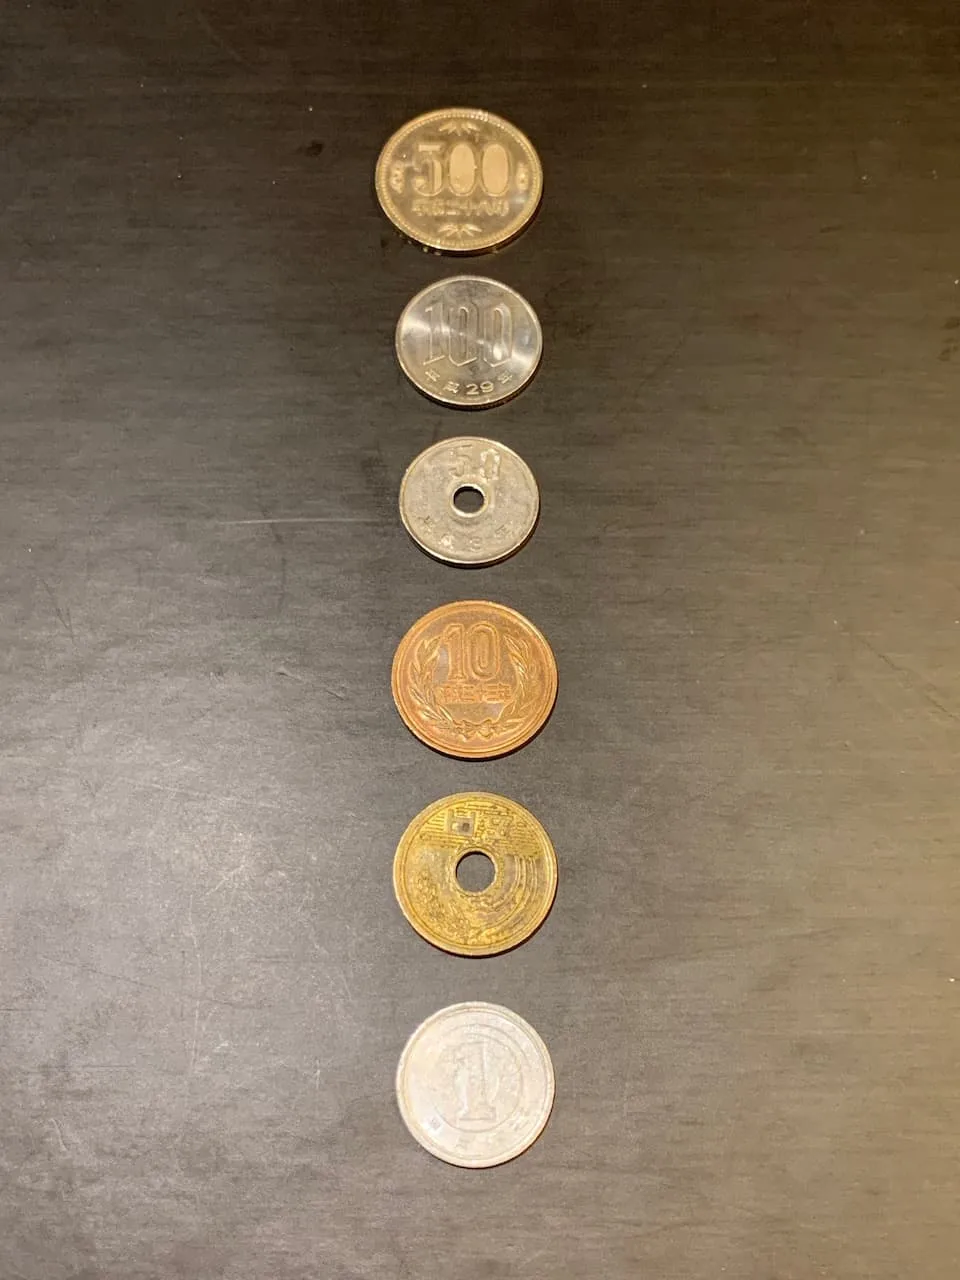 Japan Coins